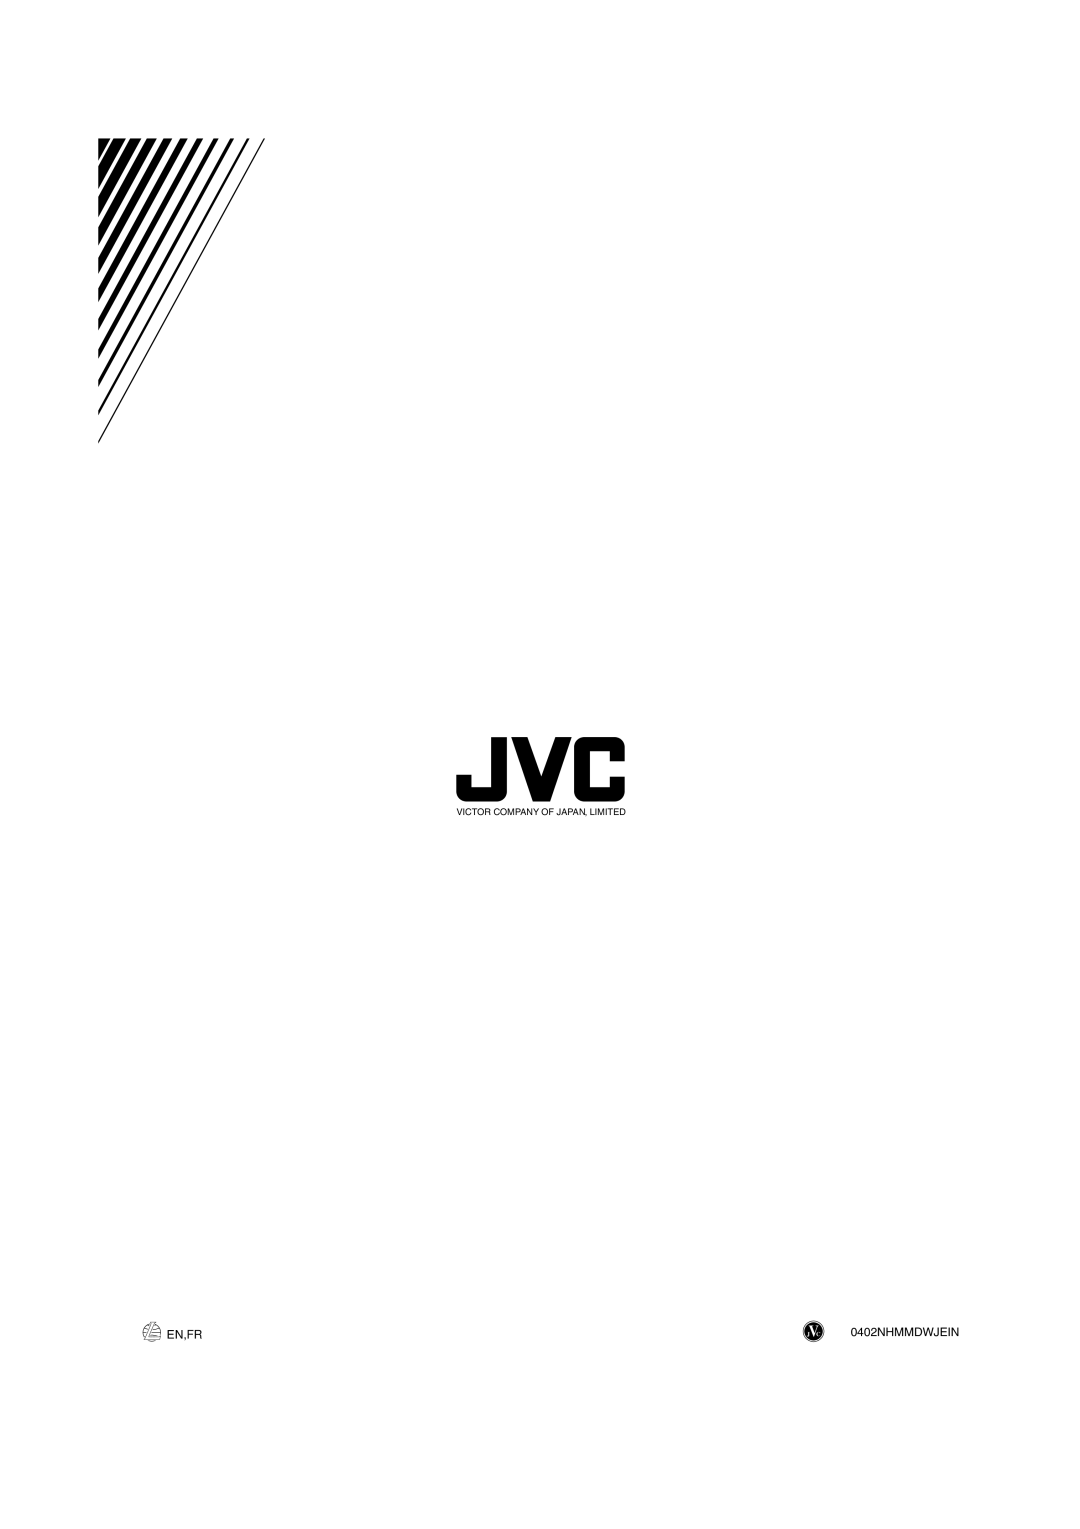 JVC RX-8020VBK manual En,Fr, 0402NHMMDWJEIN, Victor Company Of Japan, Limited 